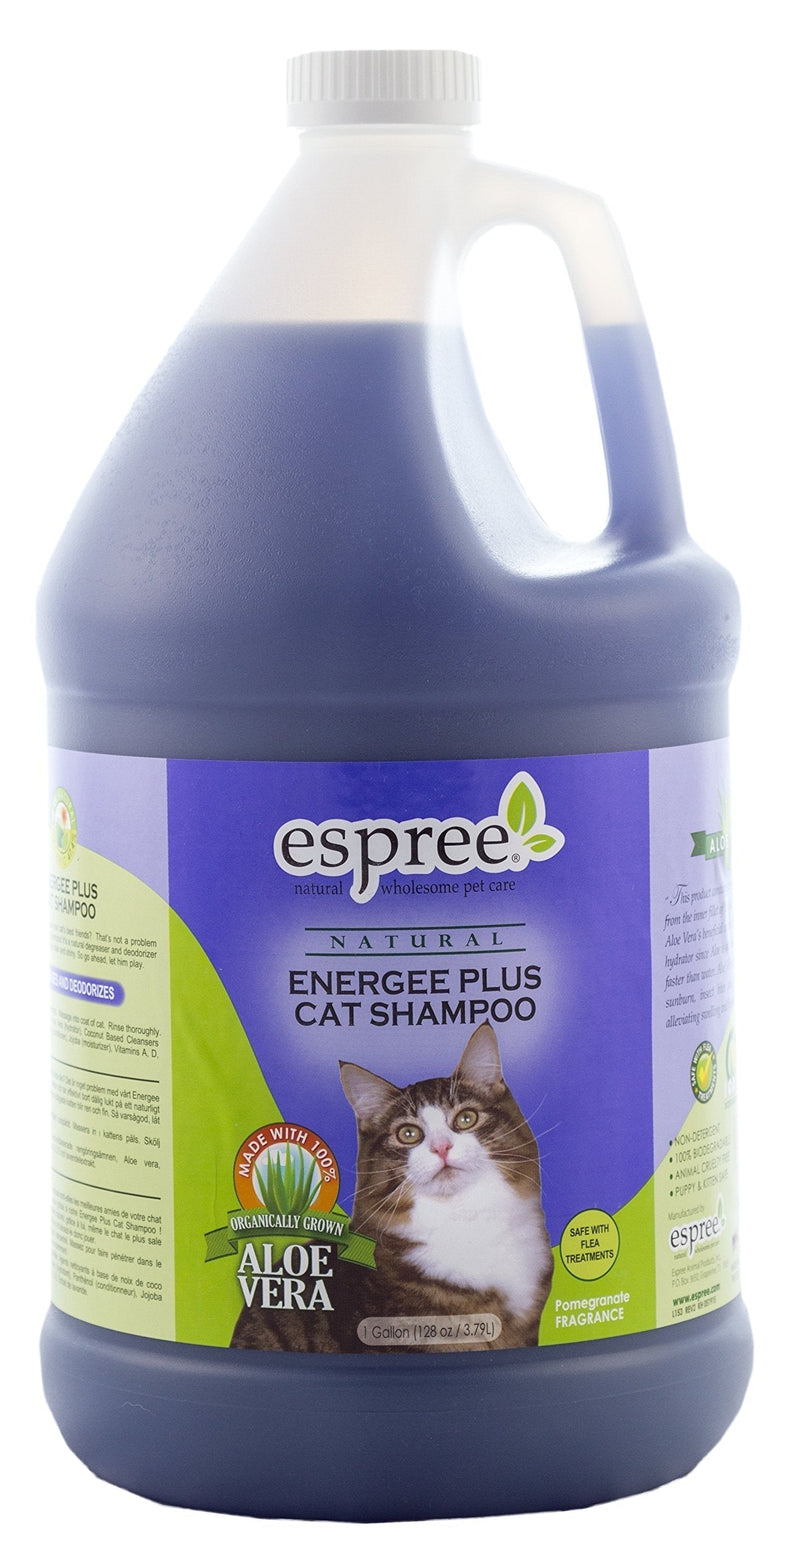 Espree Energee Plus Cat Shampoo, 3.79 Litre - PawsPlanet Australia